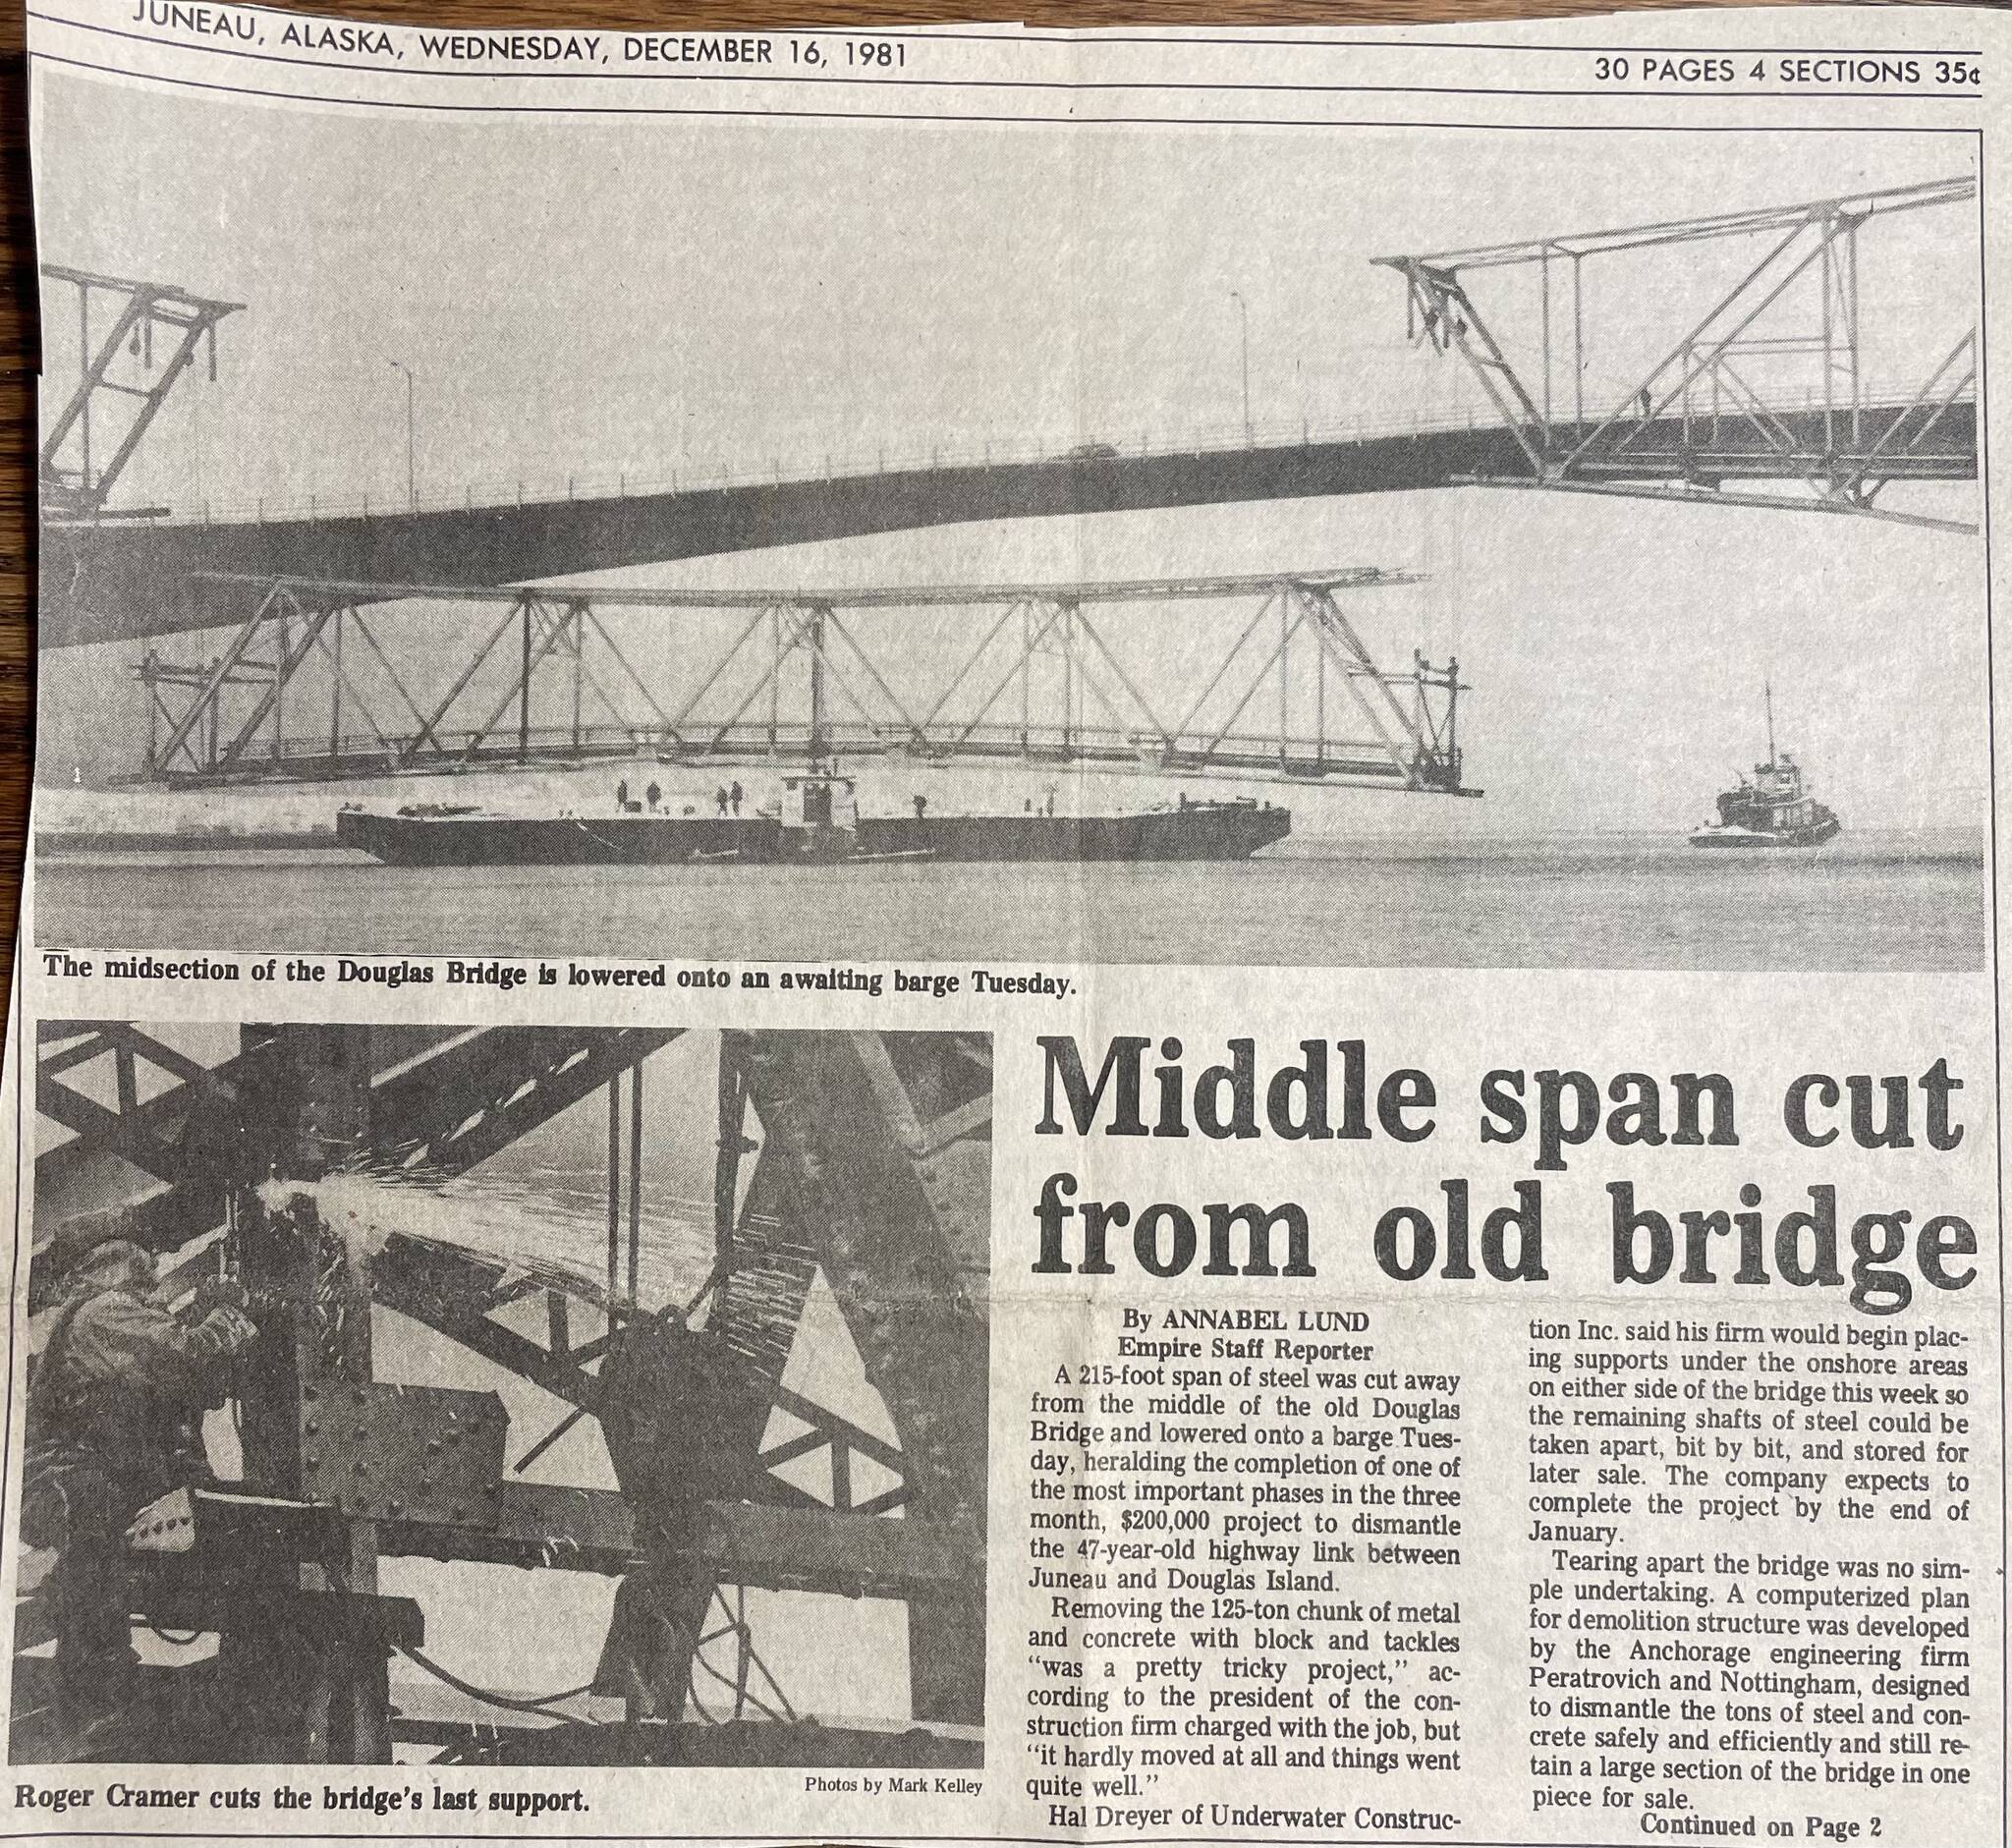 “Middle span cut from old bridge” headline in Juneau Empire on Dec. 16, 1981.